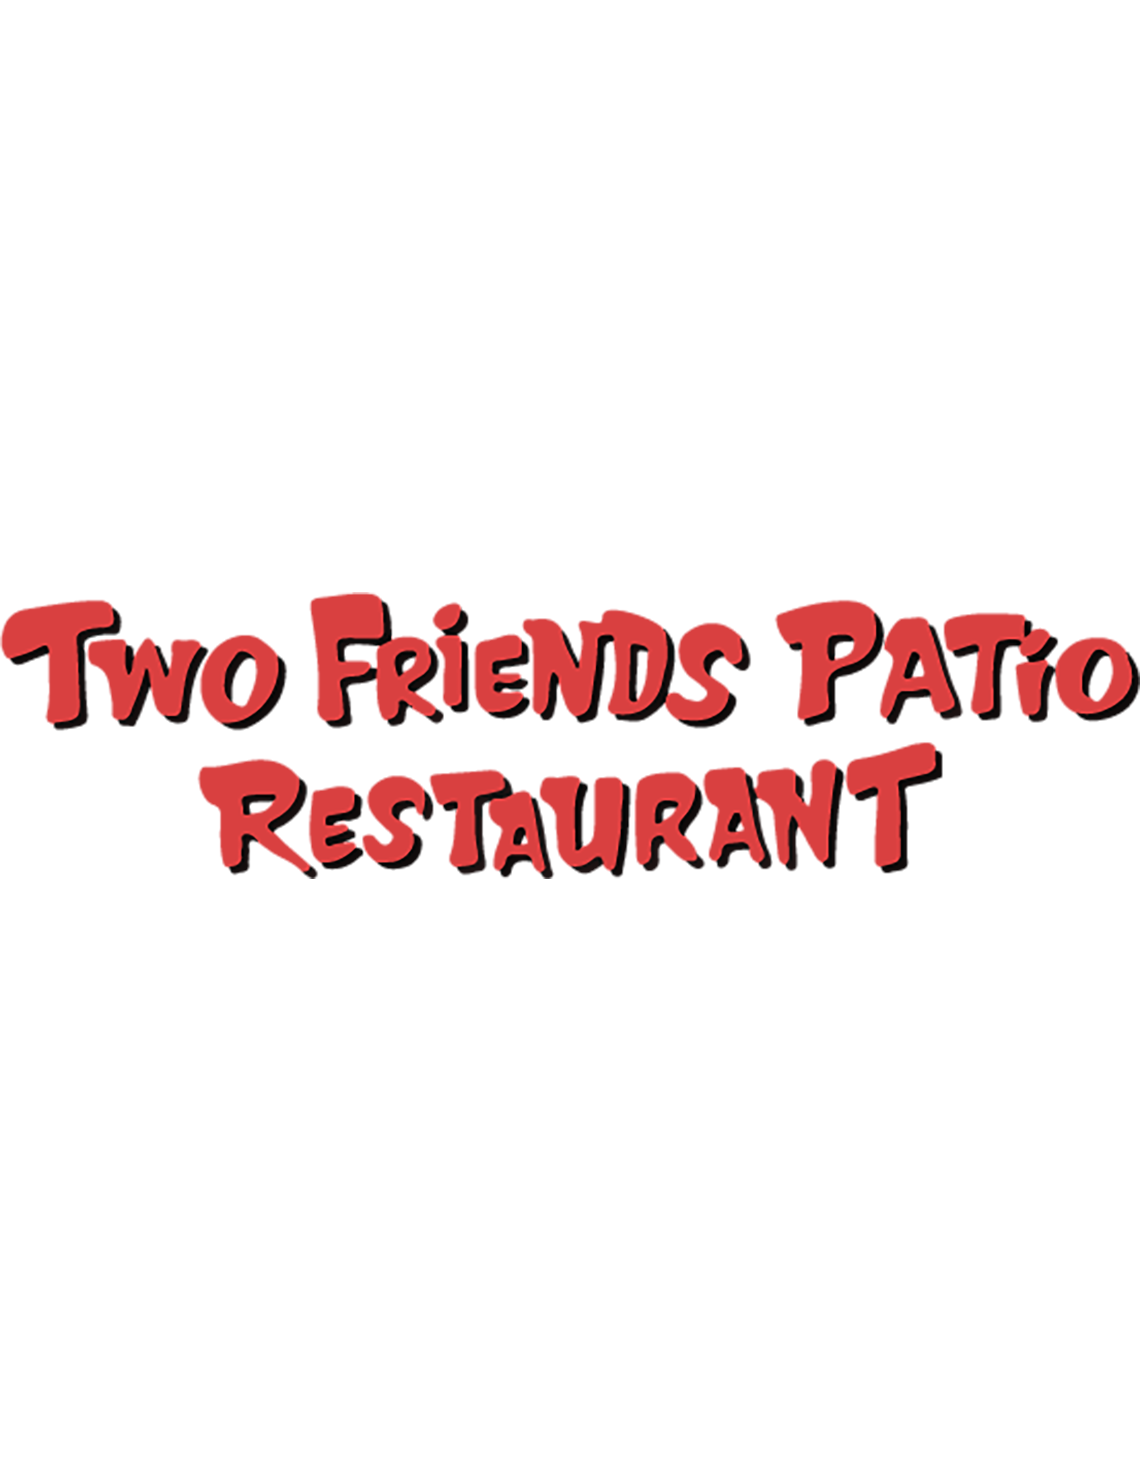 Two Friends Patio Restaurant logo